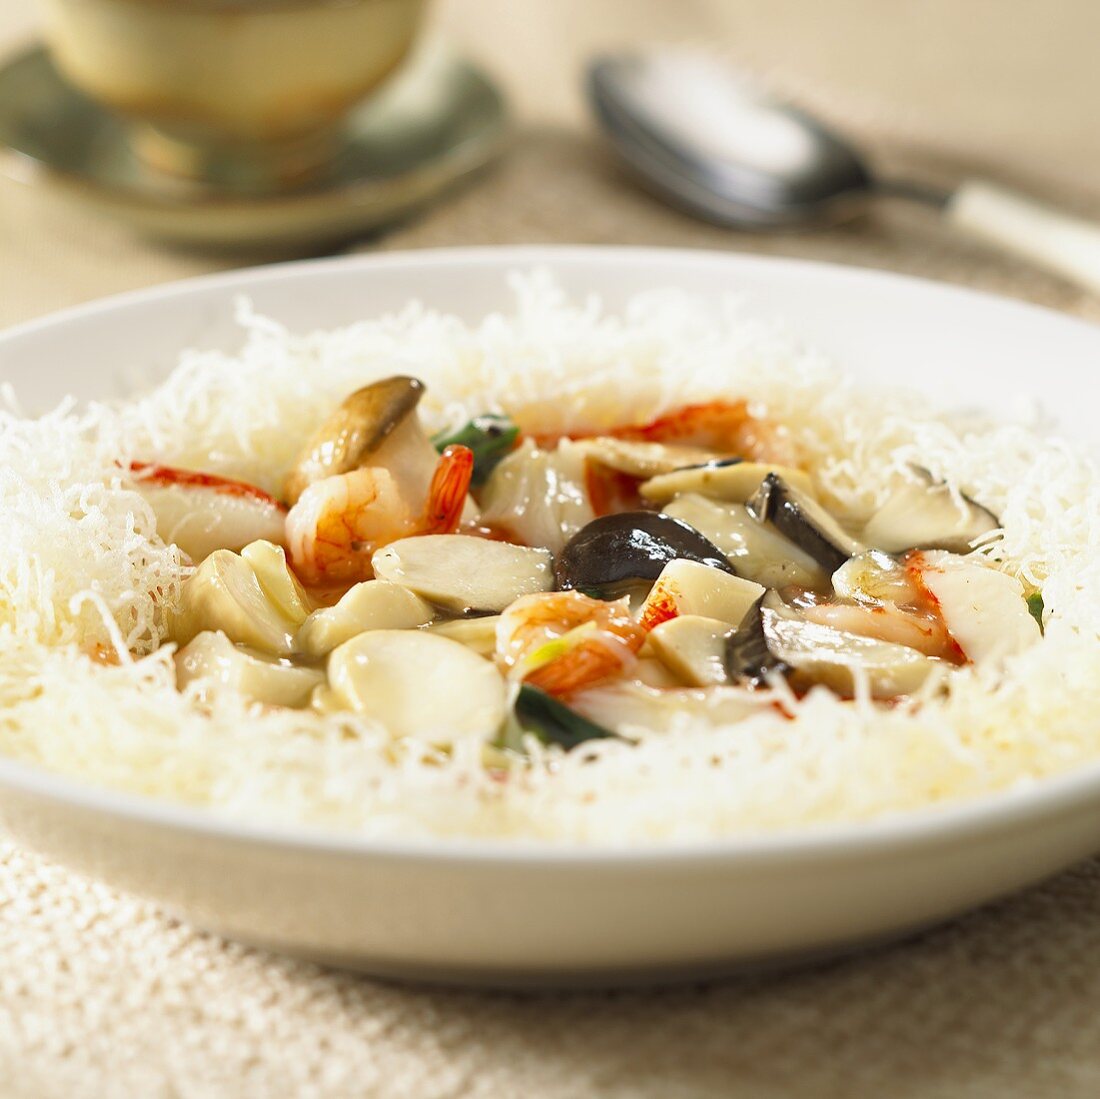 Seafood and mushroom stir-fry on rice noodles